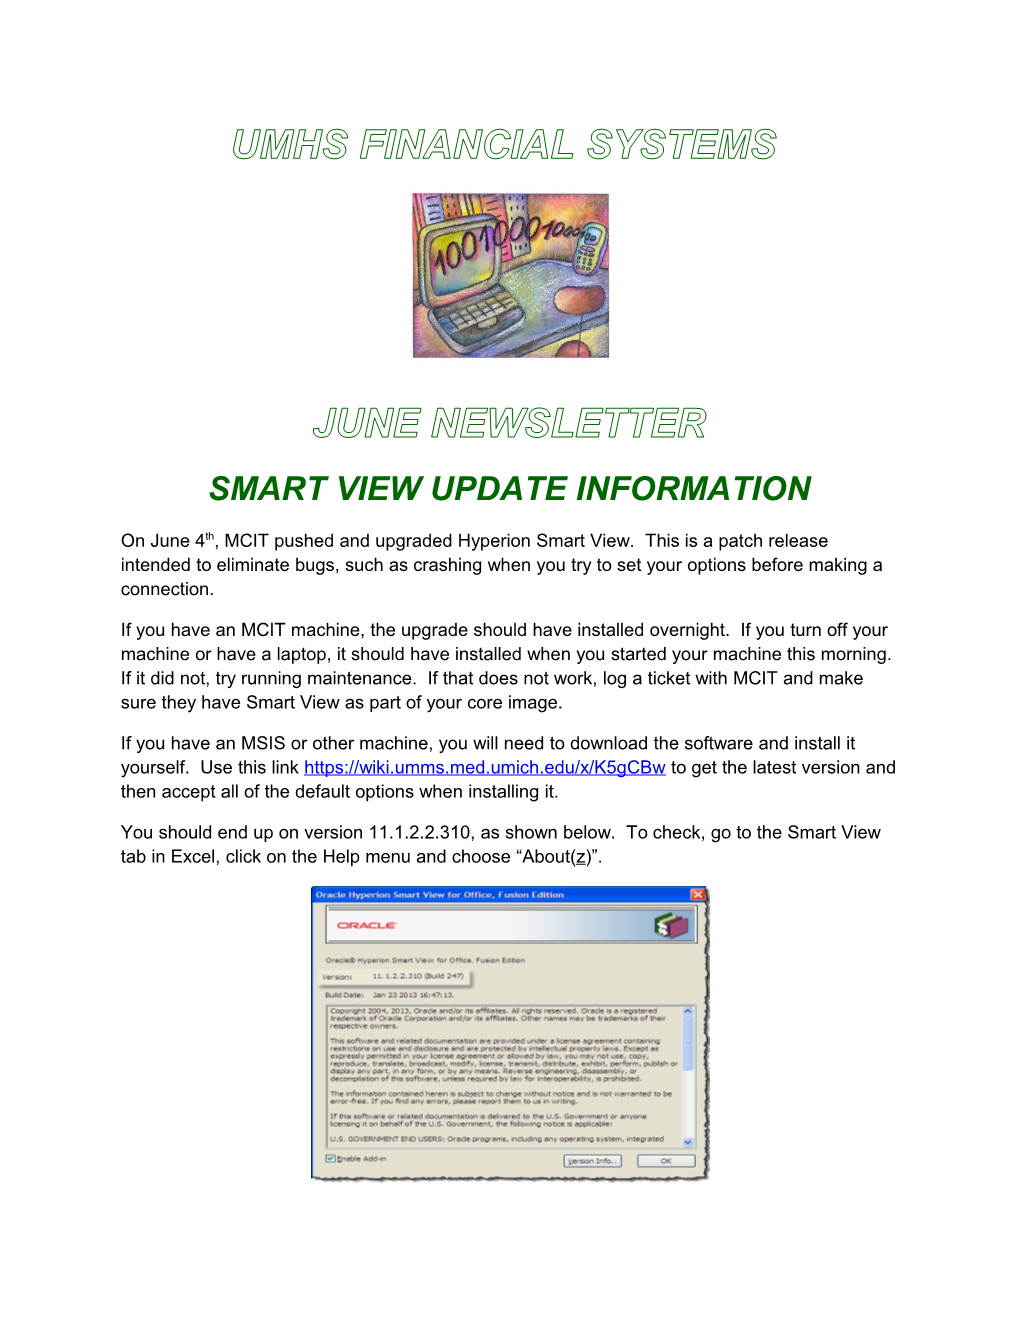 Smart View Update Information